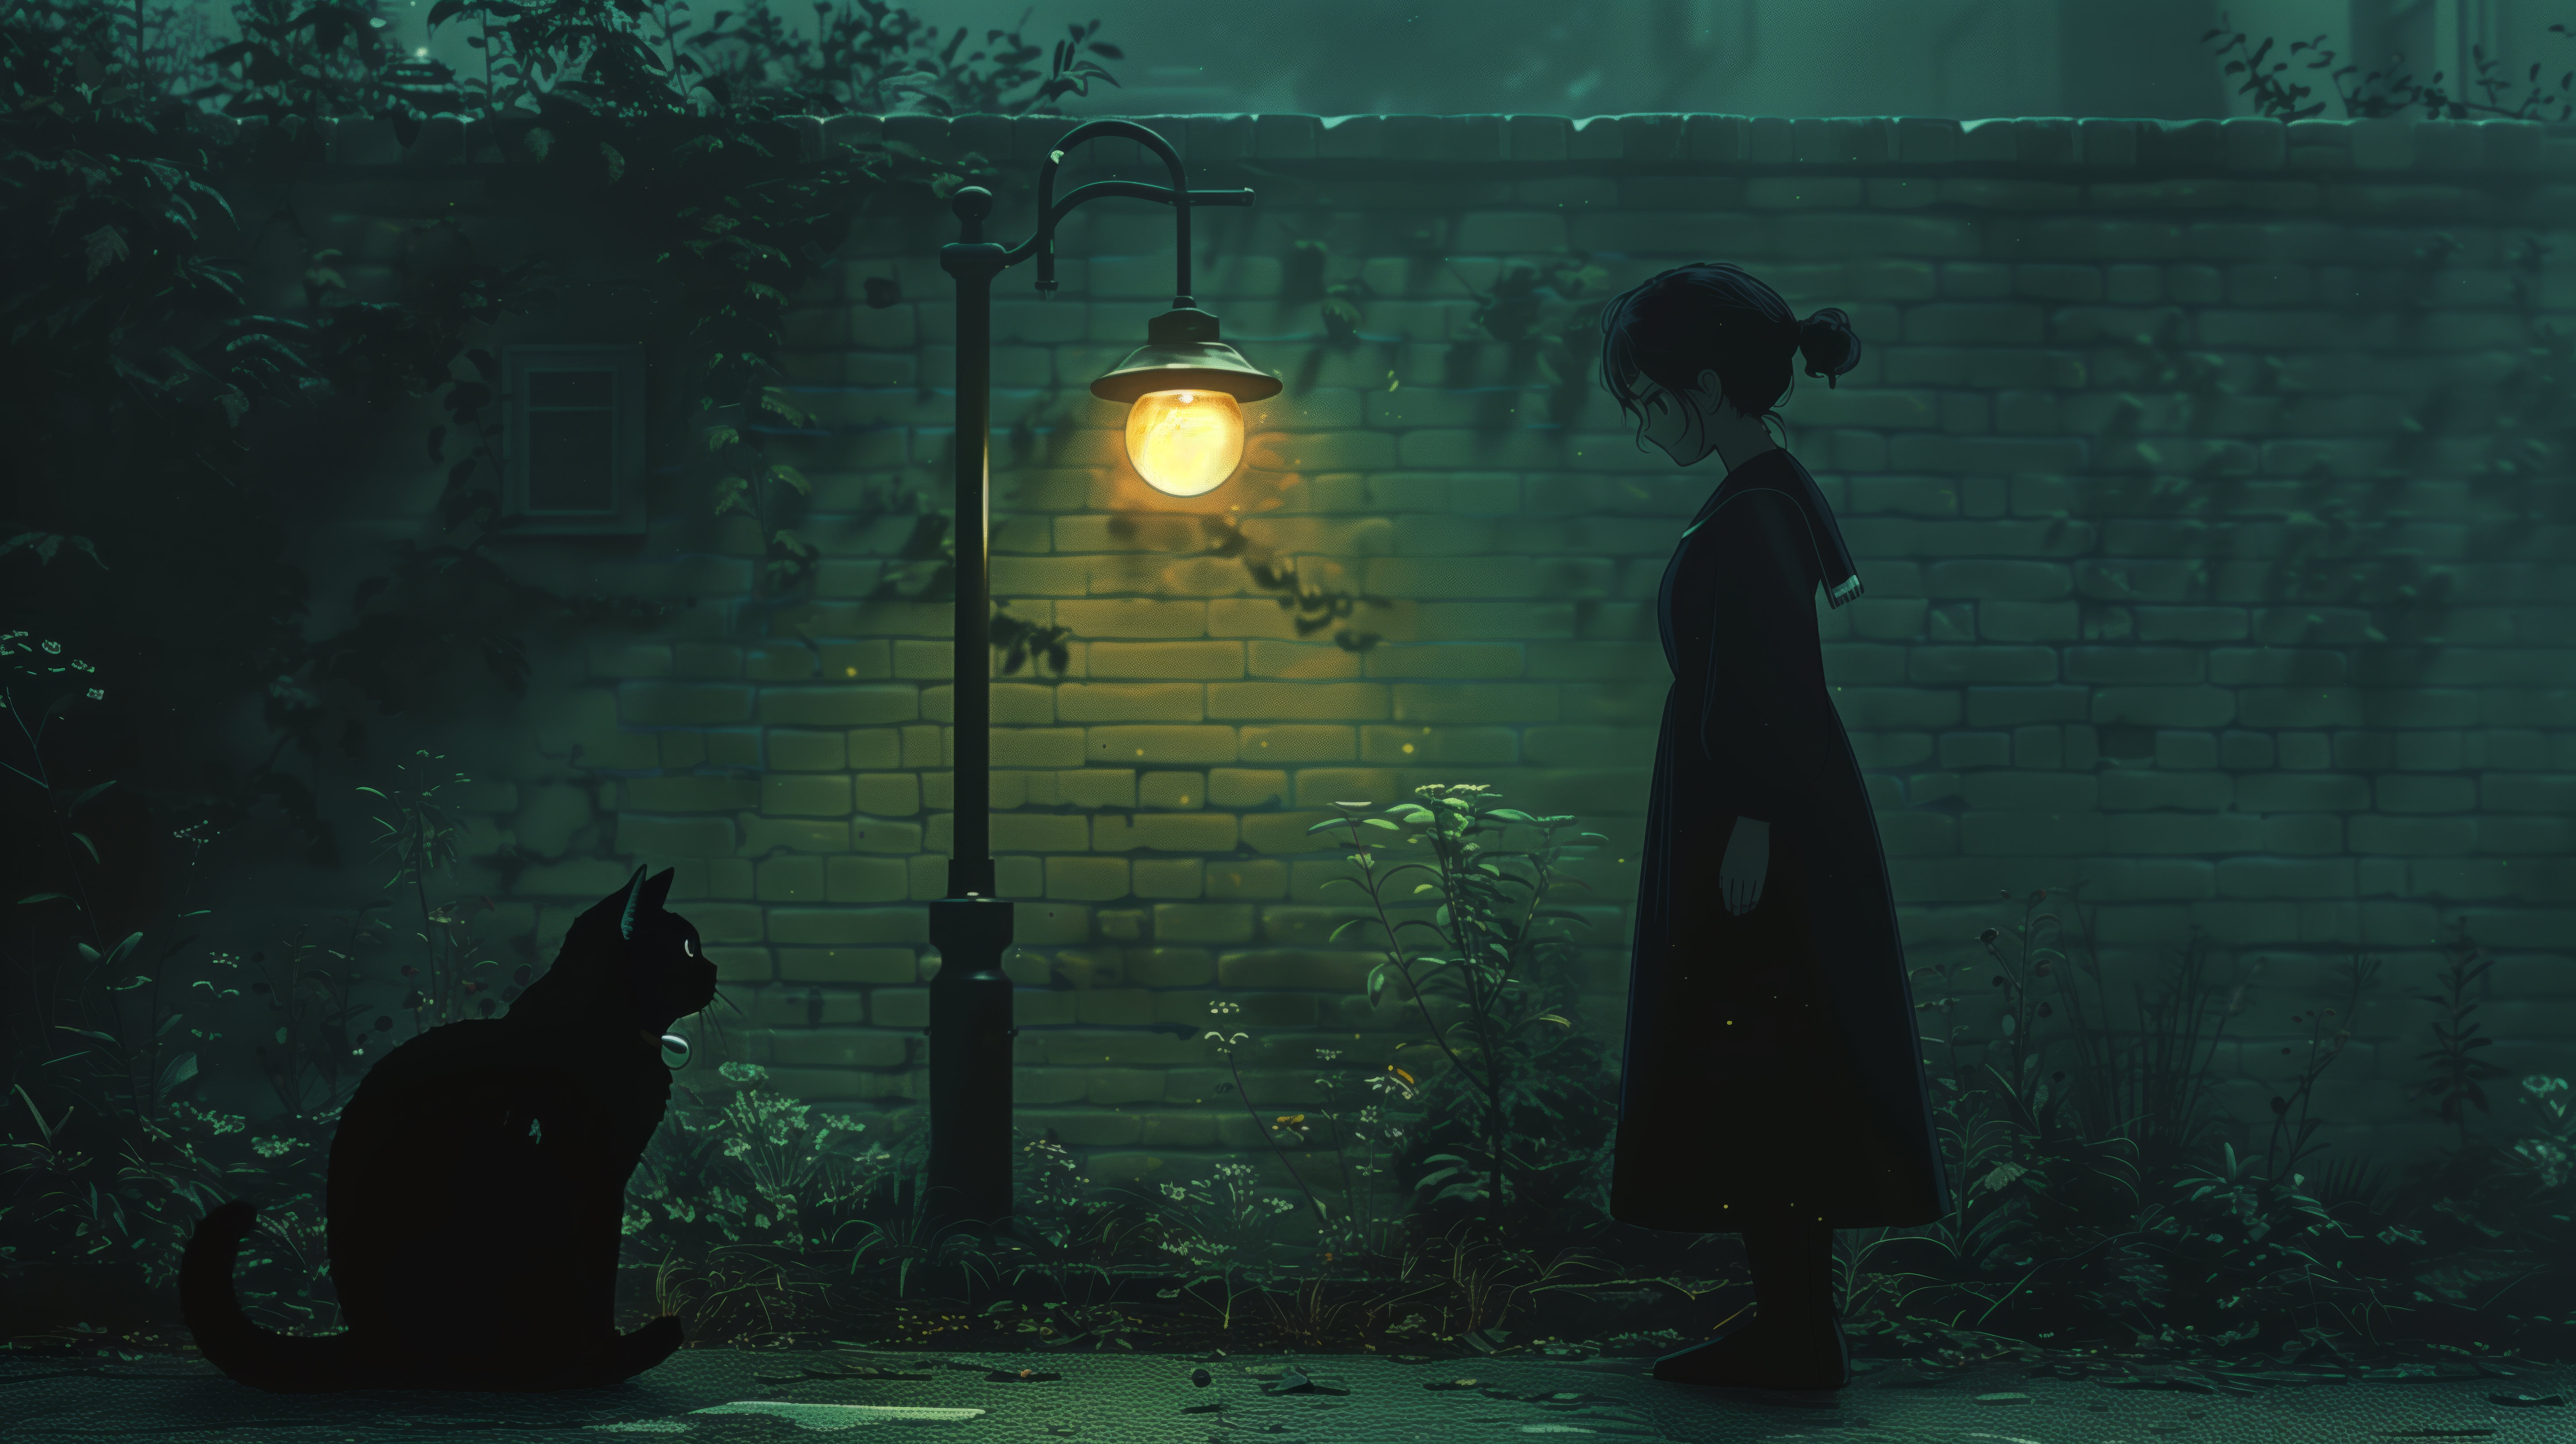 Anime 5824x3264 AI art anime illustration cats children street light bricks wall dark green